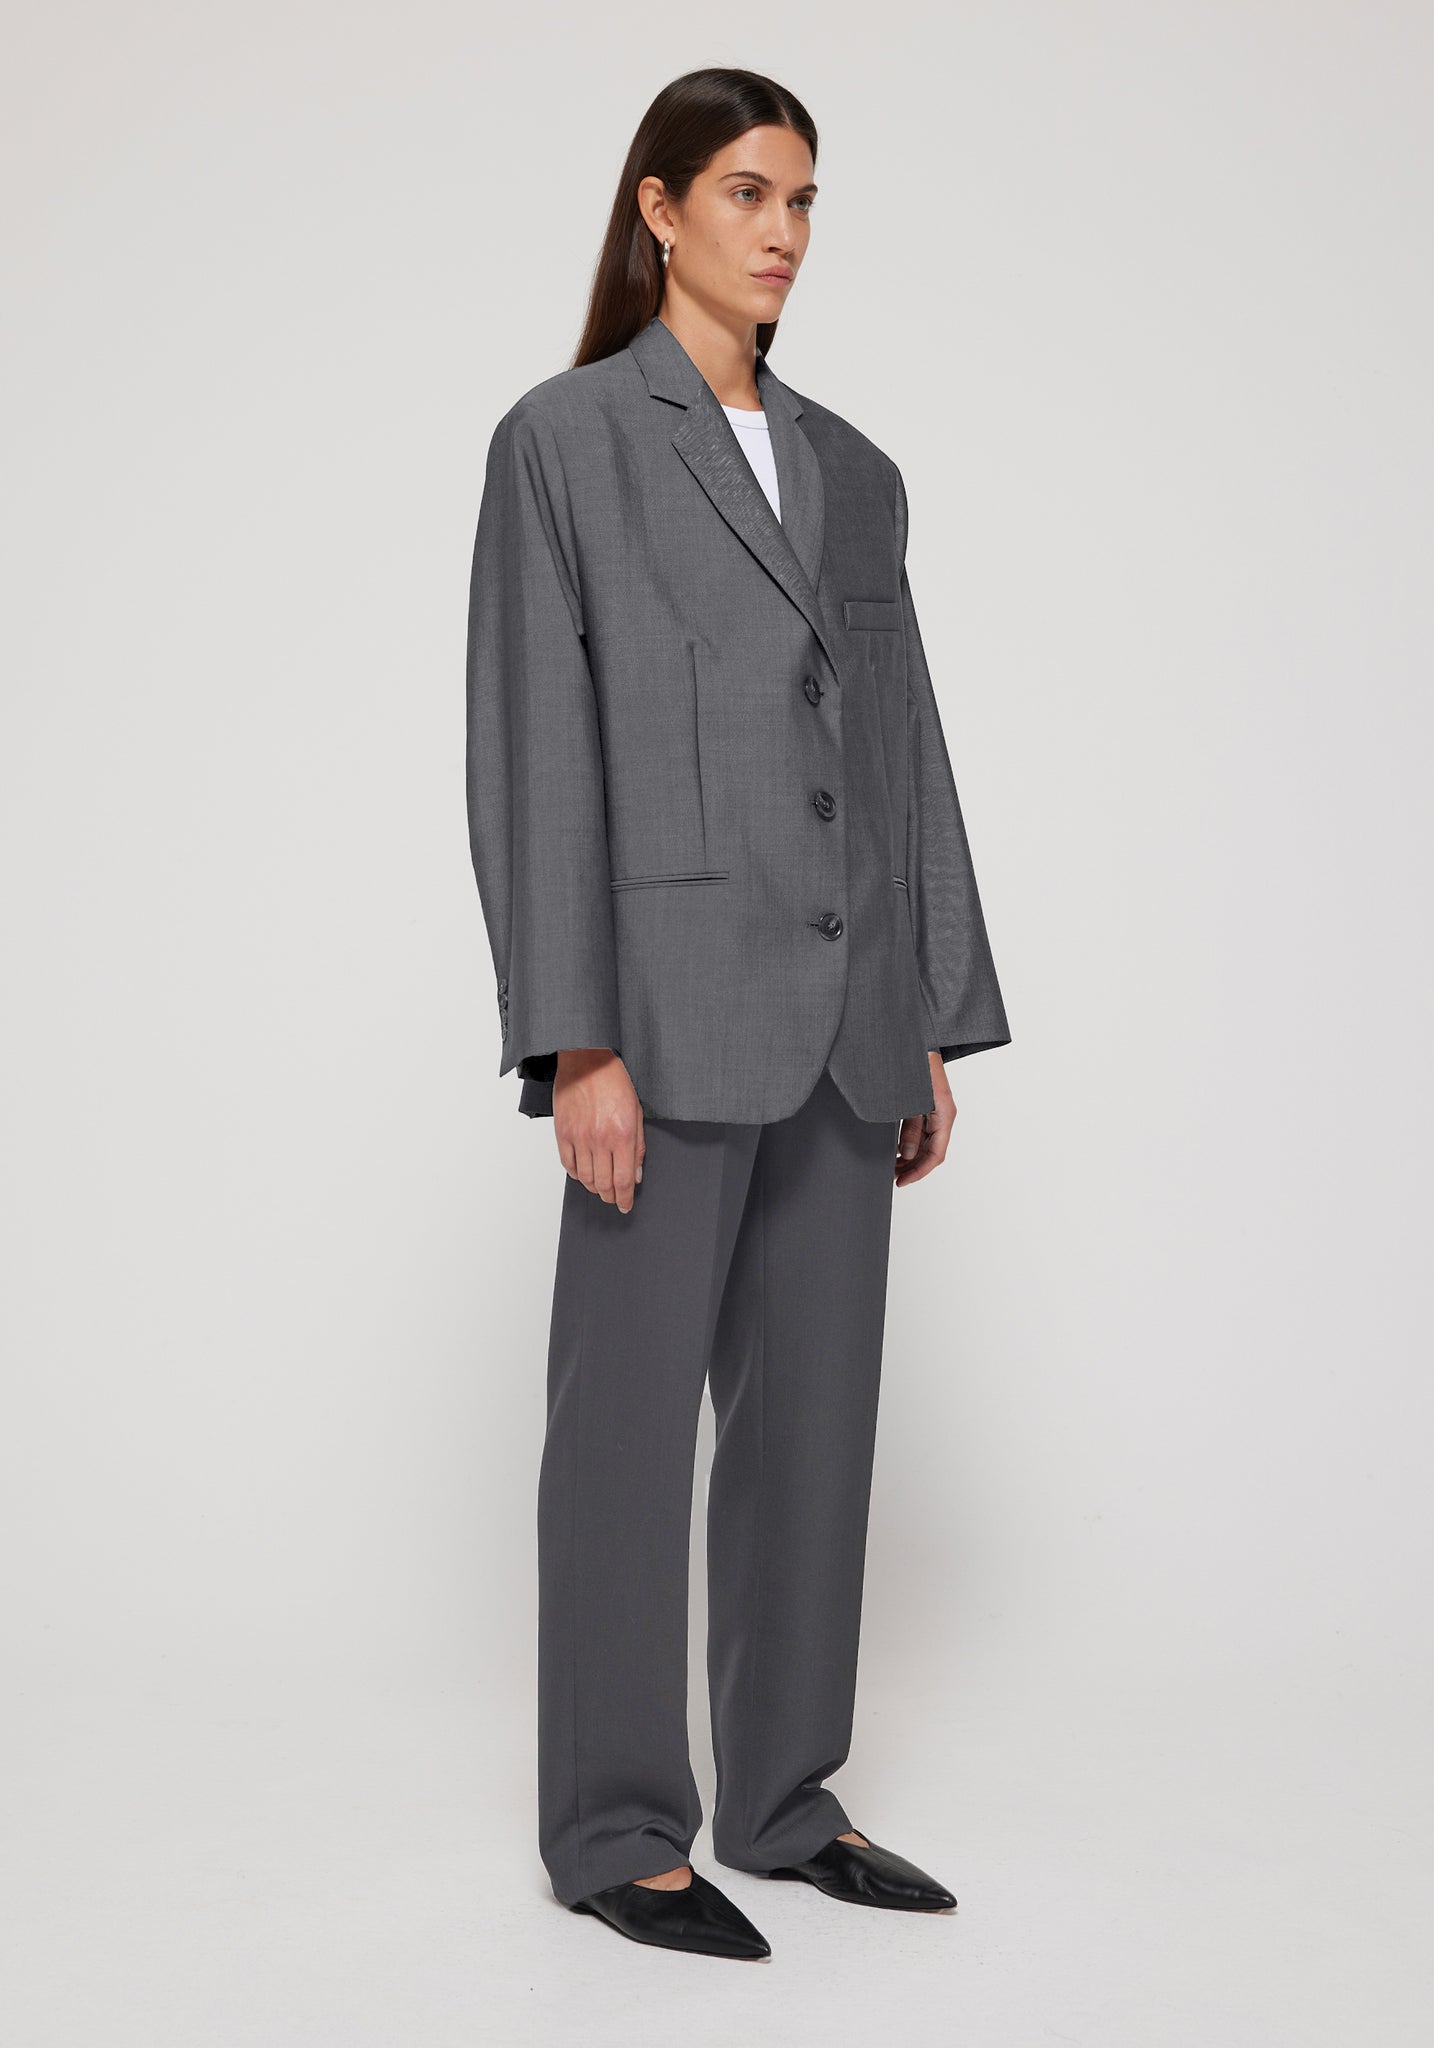 Róhe Oversized blazer grey melange side